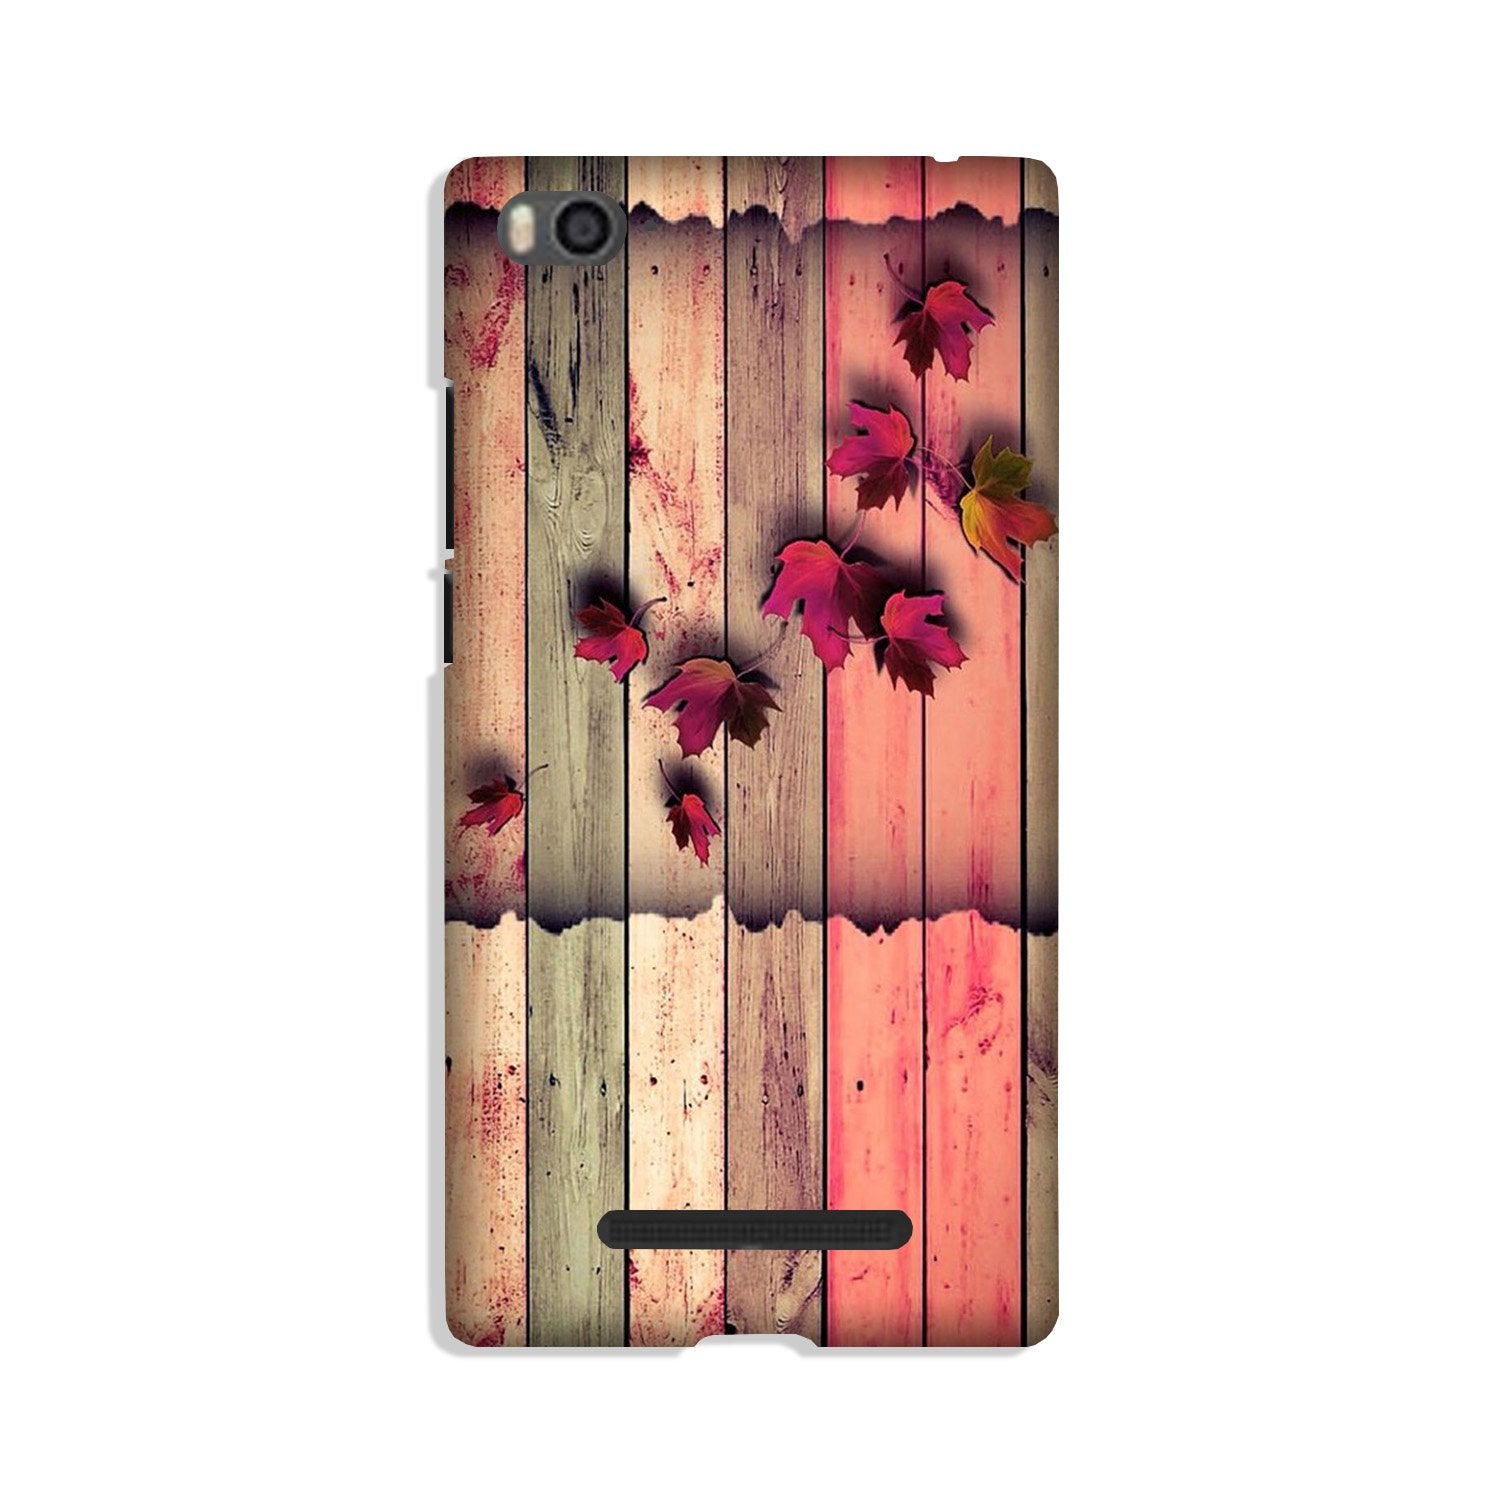 Wooden look2 Case for Xiaomi Redmi 5A